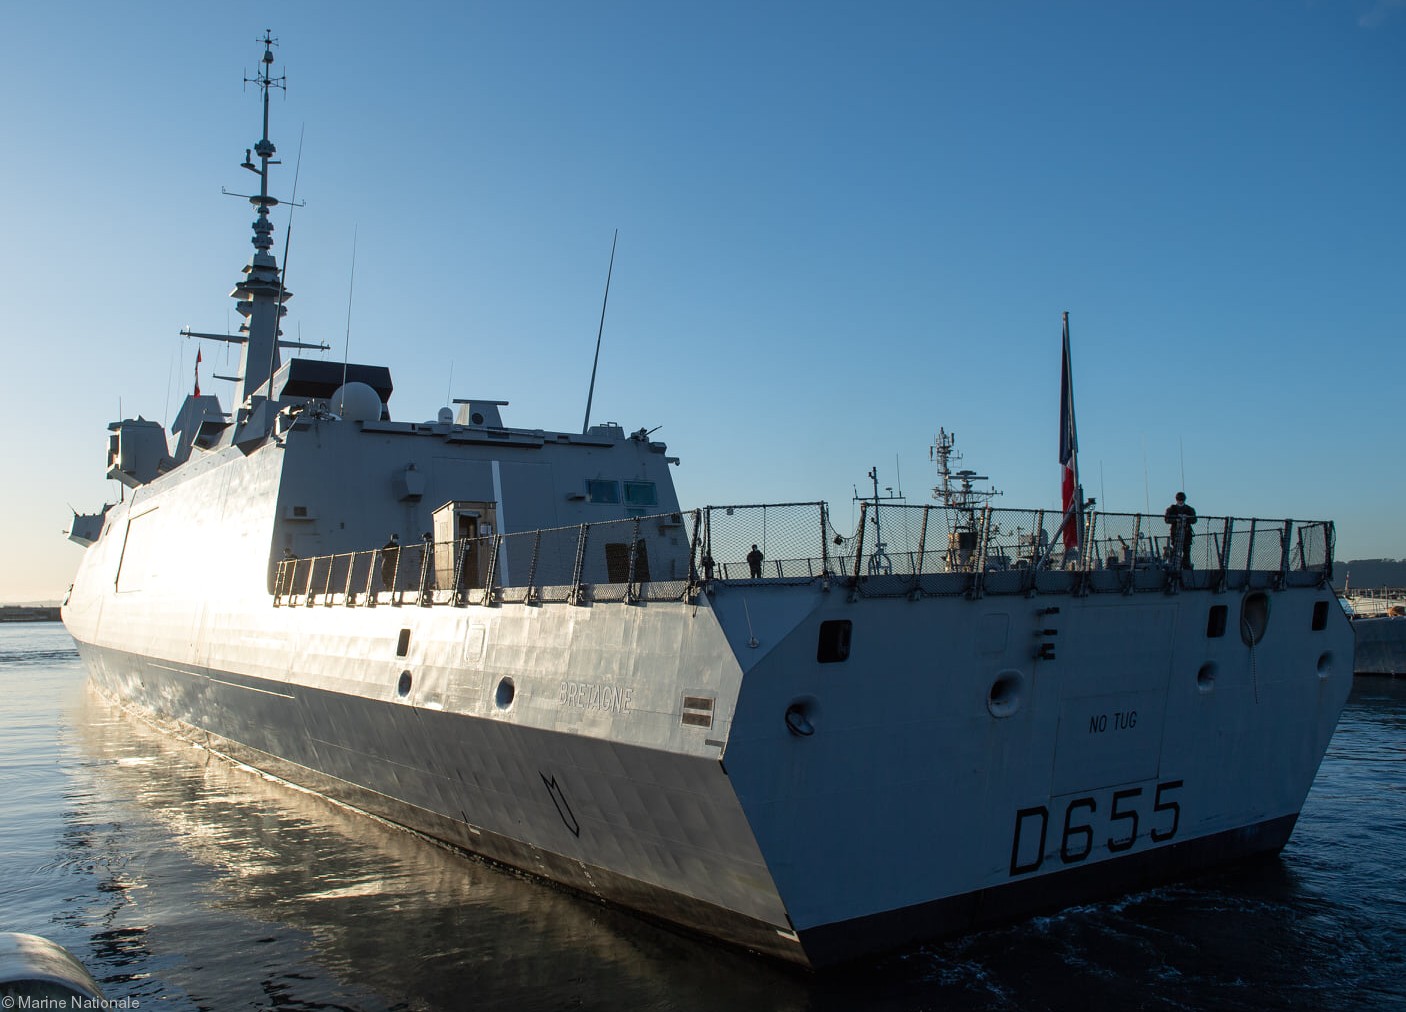 d-655 fs bretagne fremm aquitaine class frigate fregate multi purpose french navy marine nationale 19